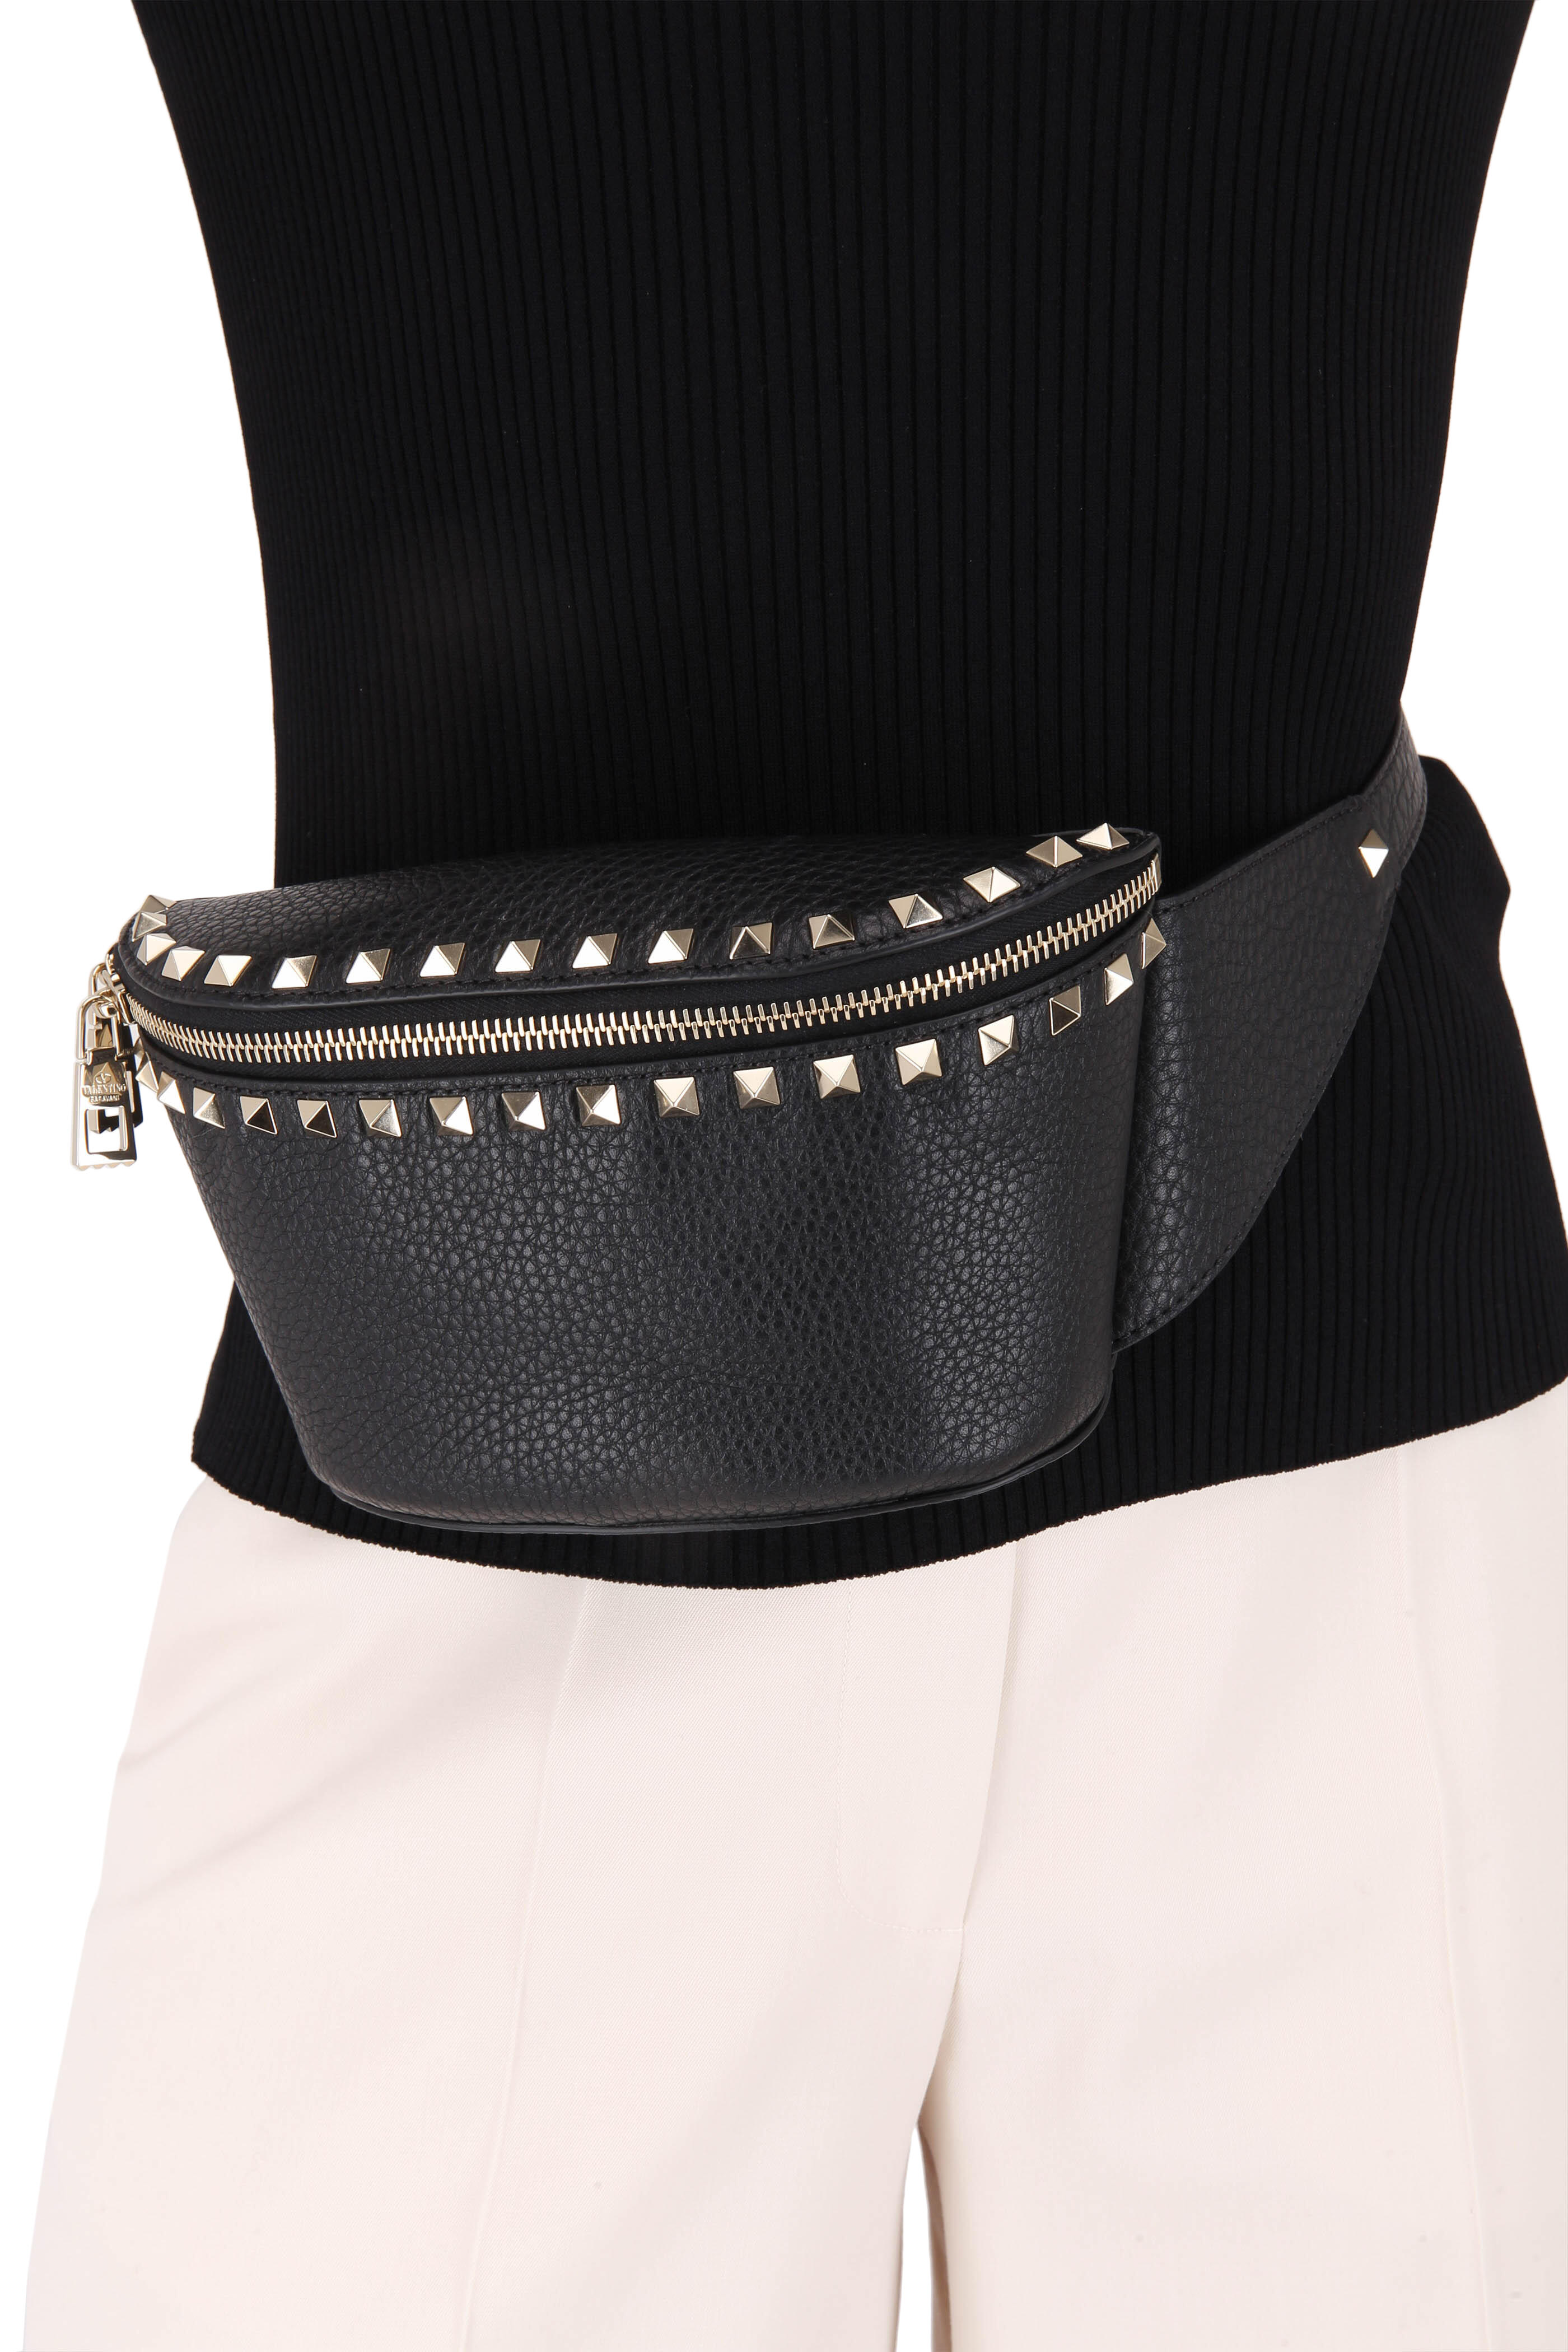 talentfulde ironi lejr Valentino Garavani - Rockstud Black Pebbled Leather Belt Bag